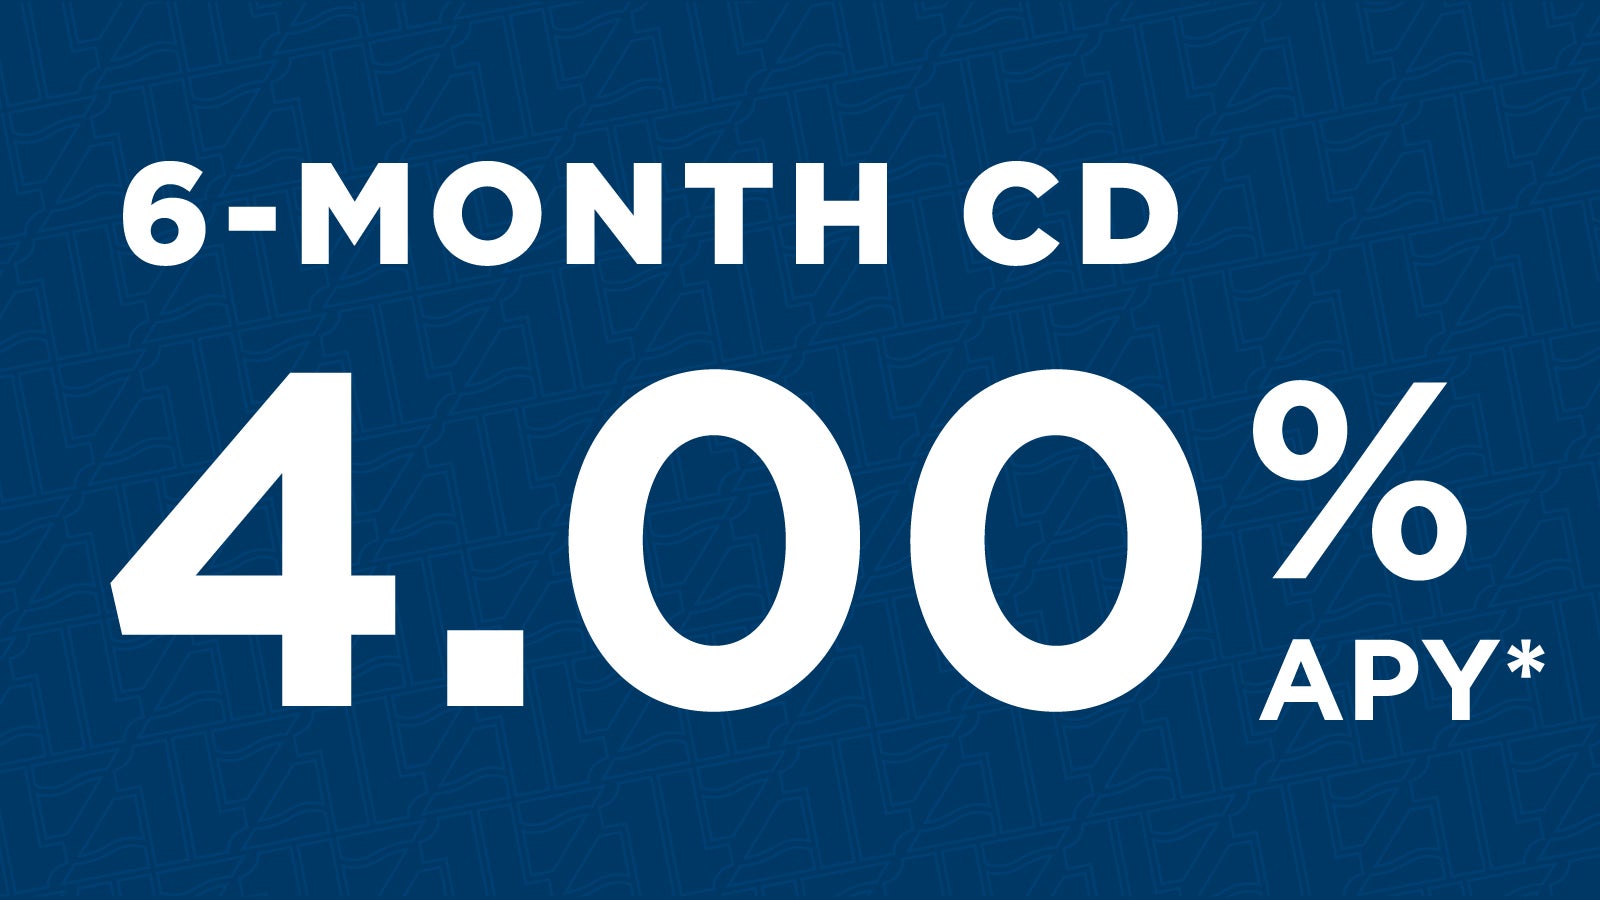 6-Month CD (Certificate of Deposit) 4.00% APY